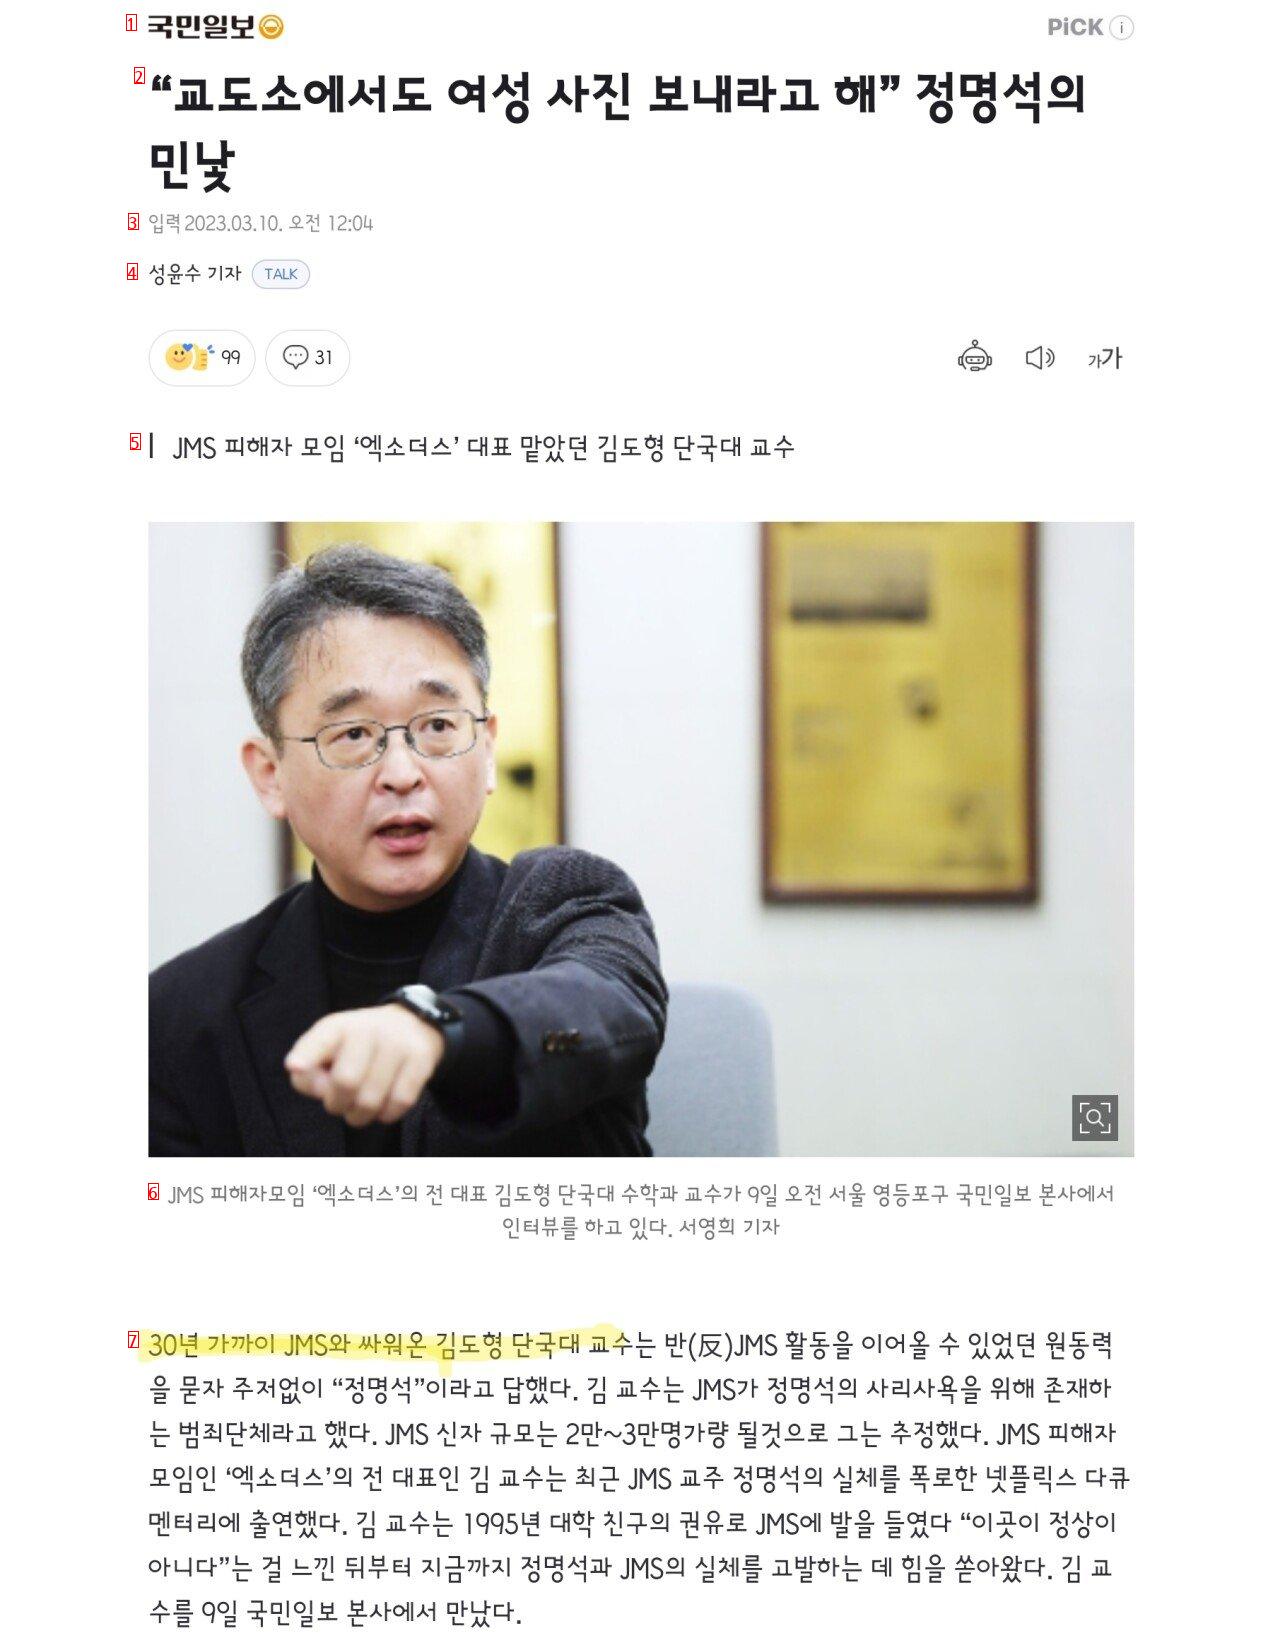 The reason why the professor, who revealed the KBS JMS god, stepped on full accelerator.